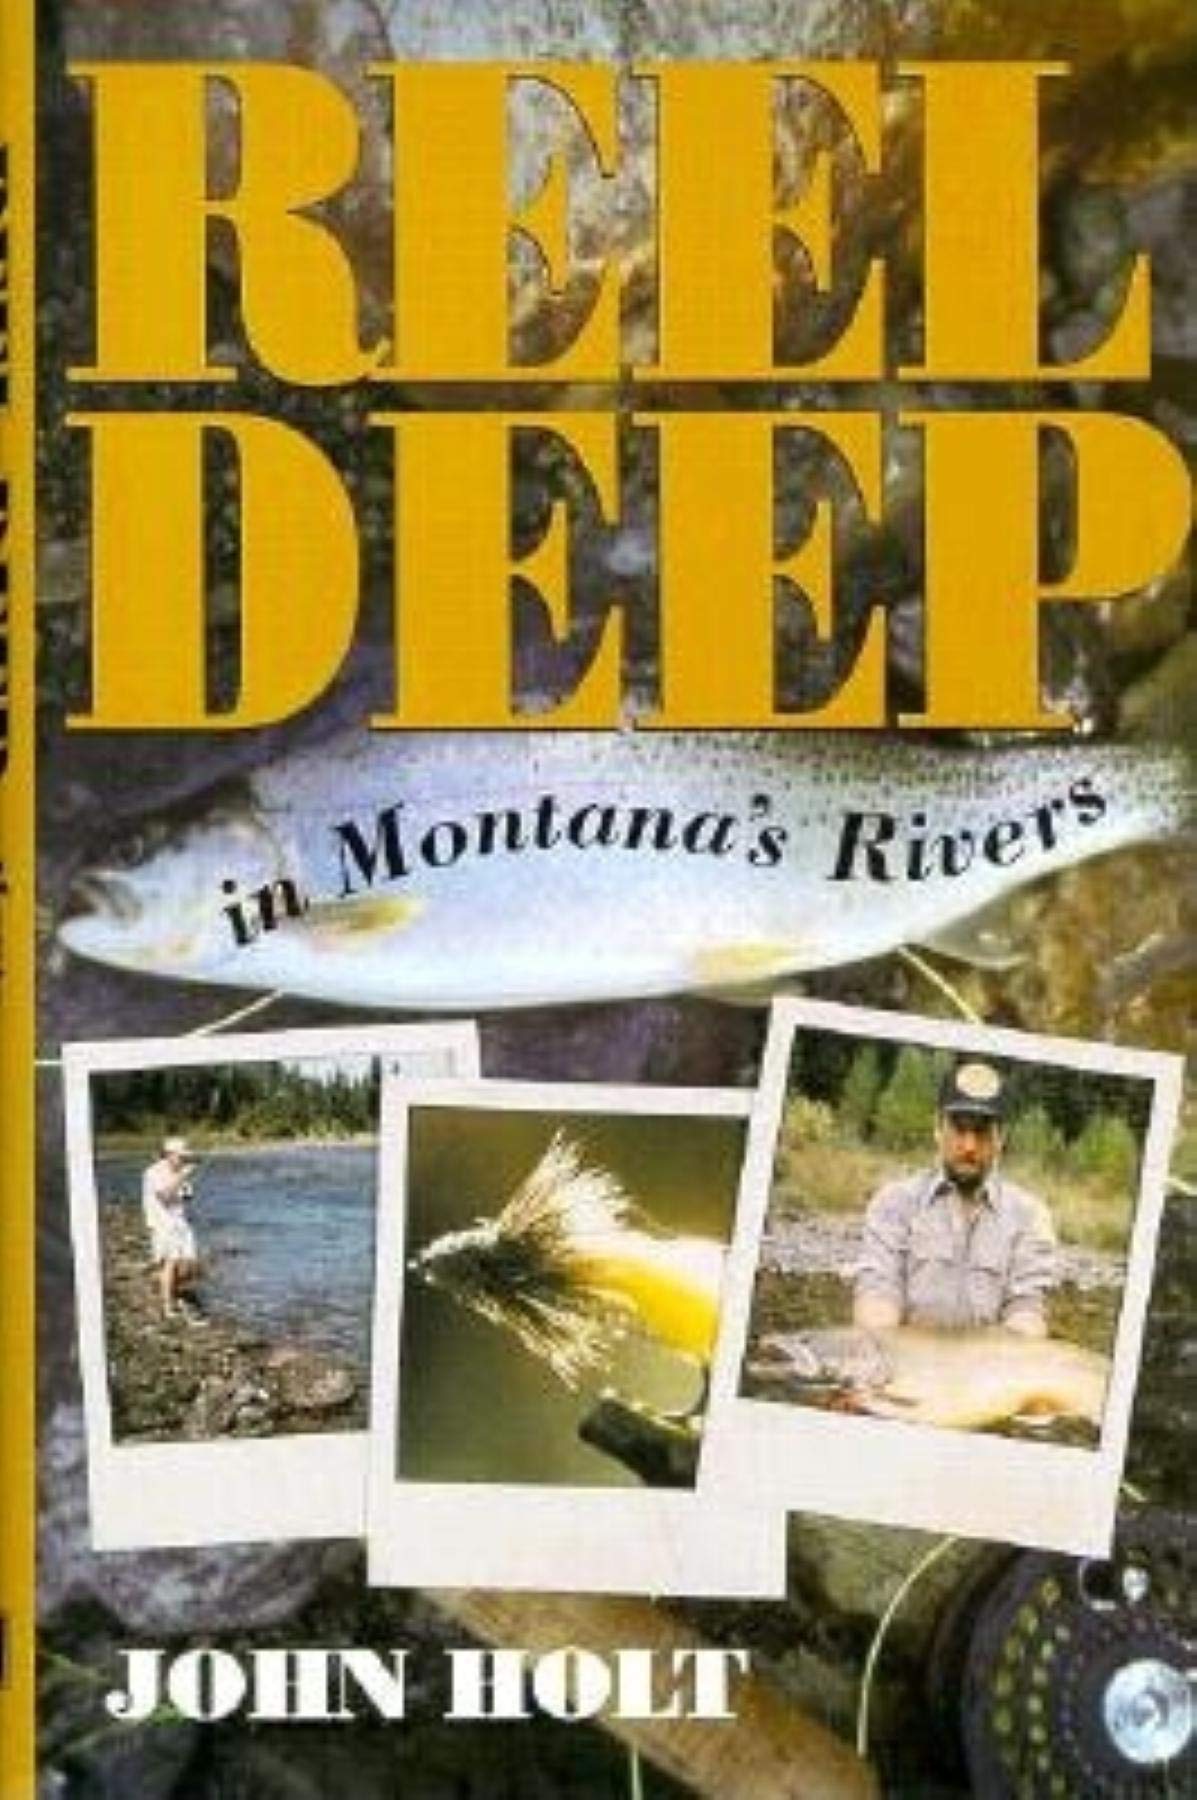 Reel Deep in Montana's Rivers